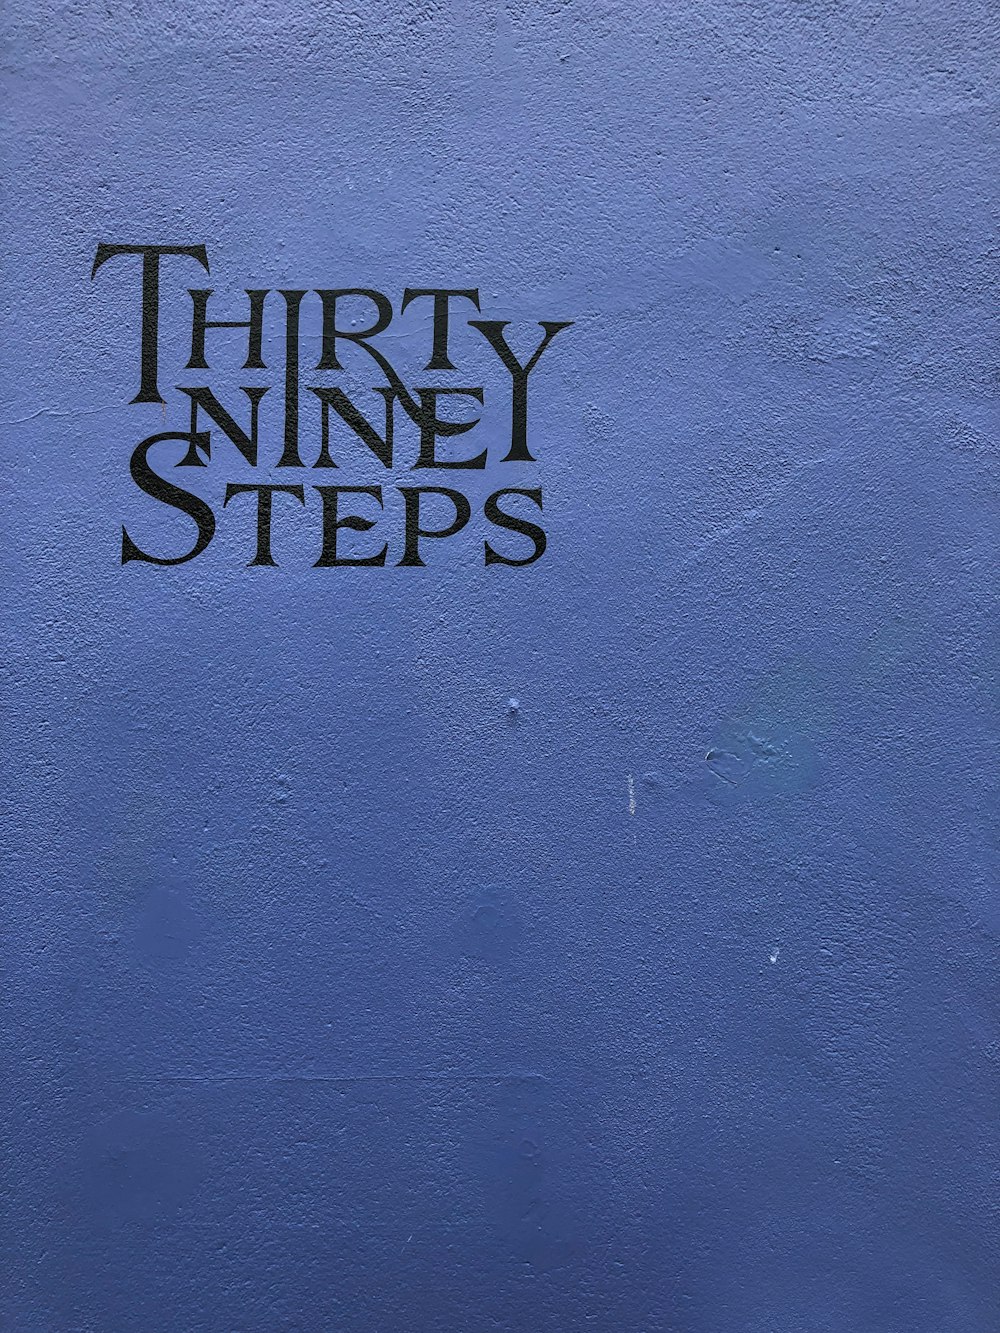 Thirty Nine Steps text